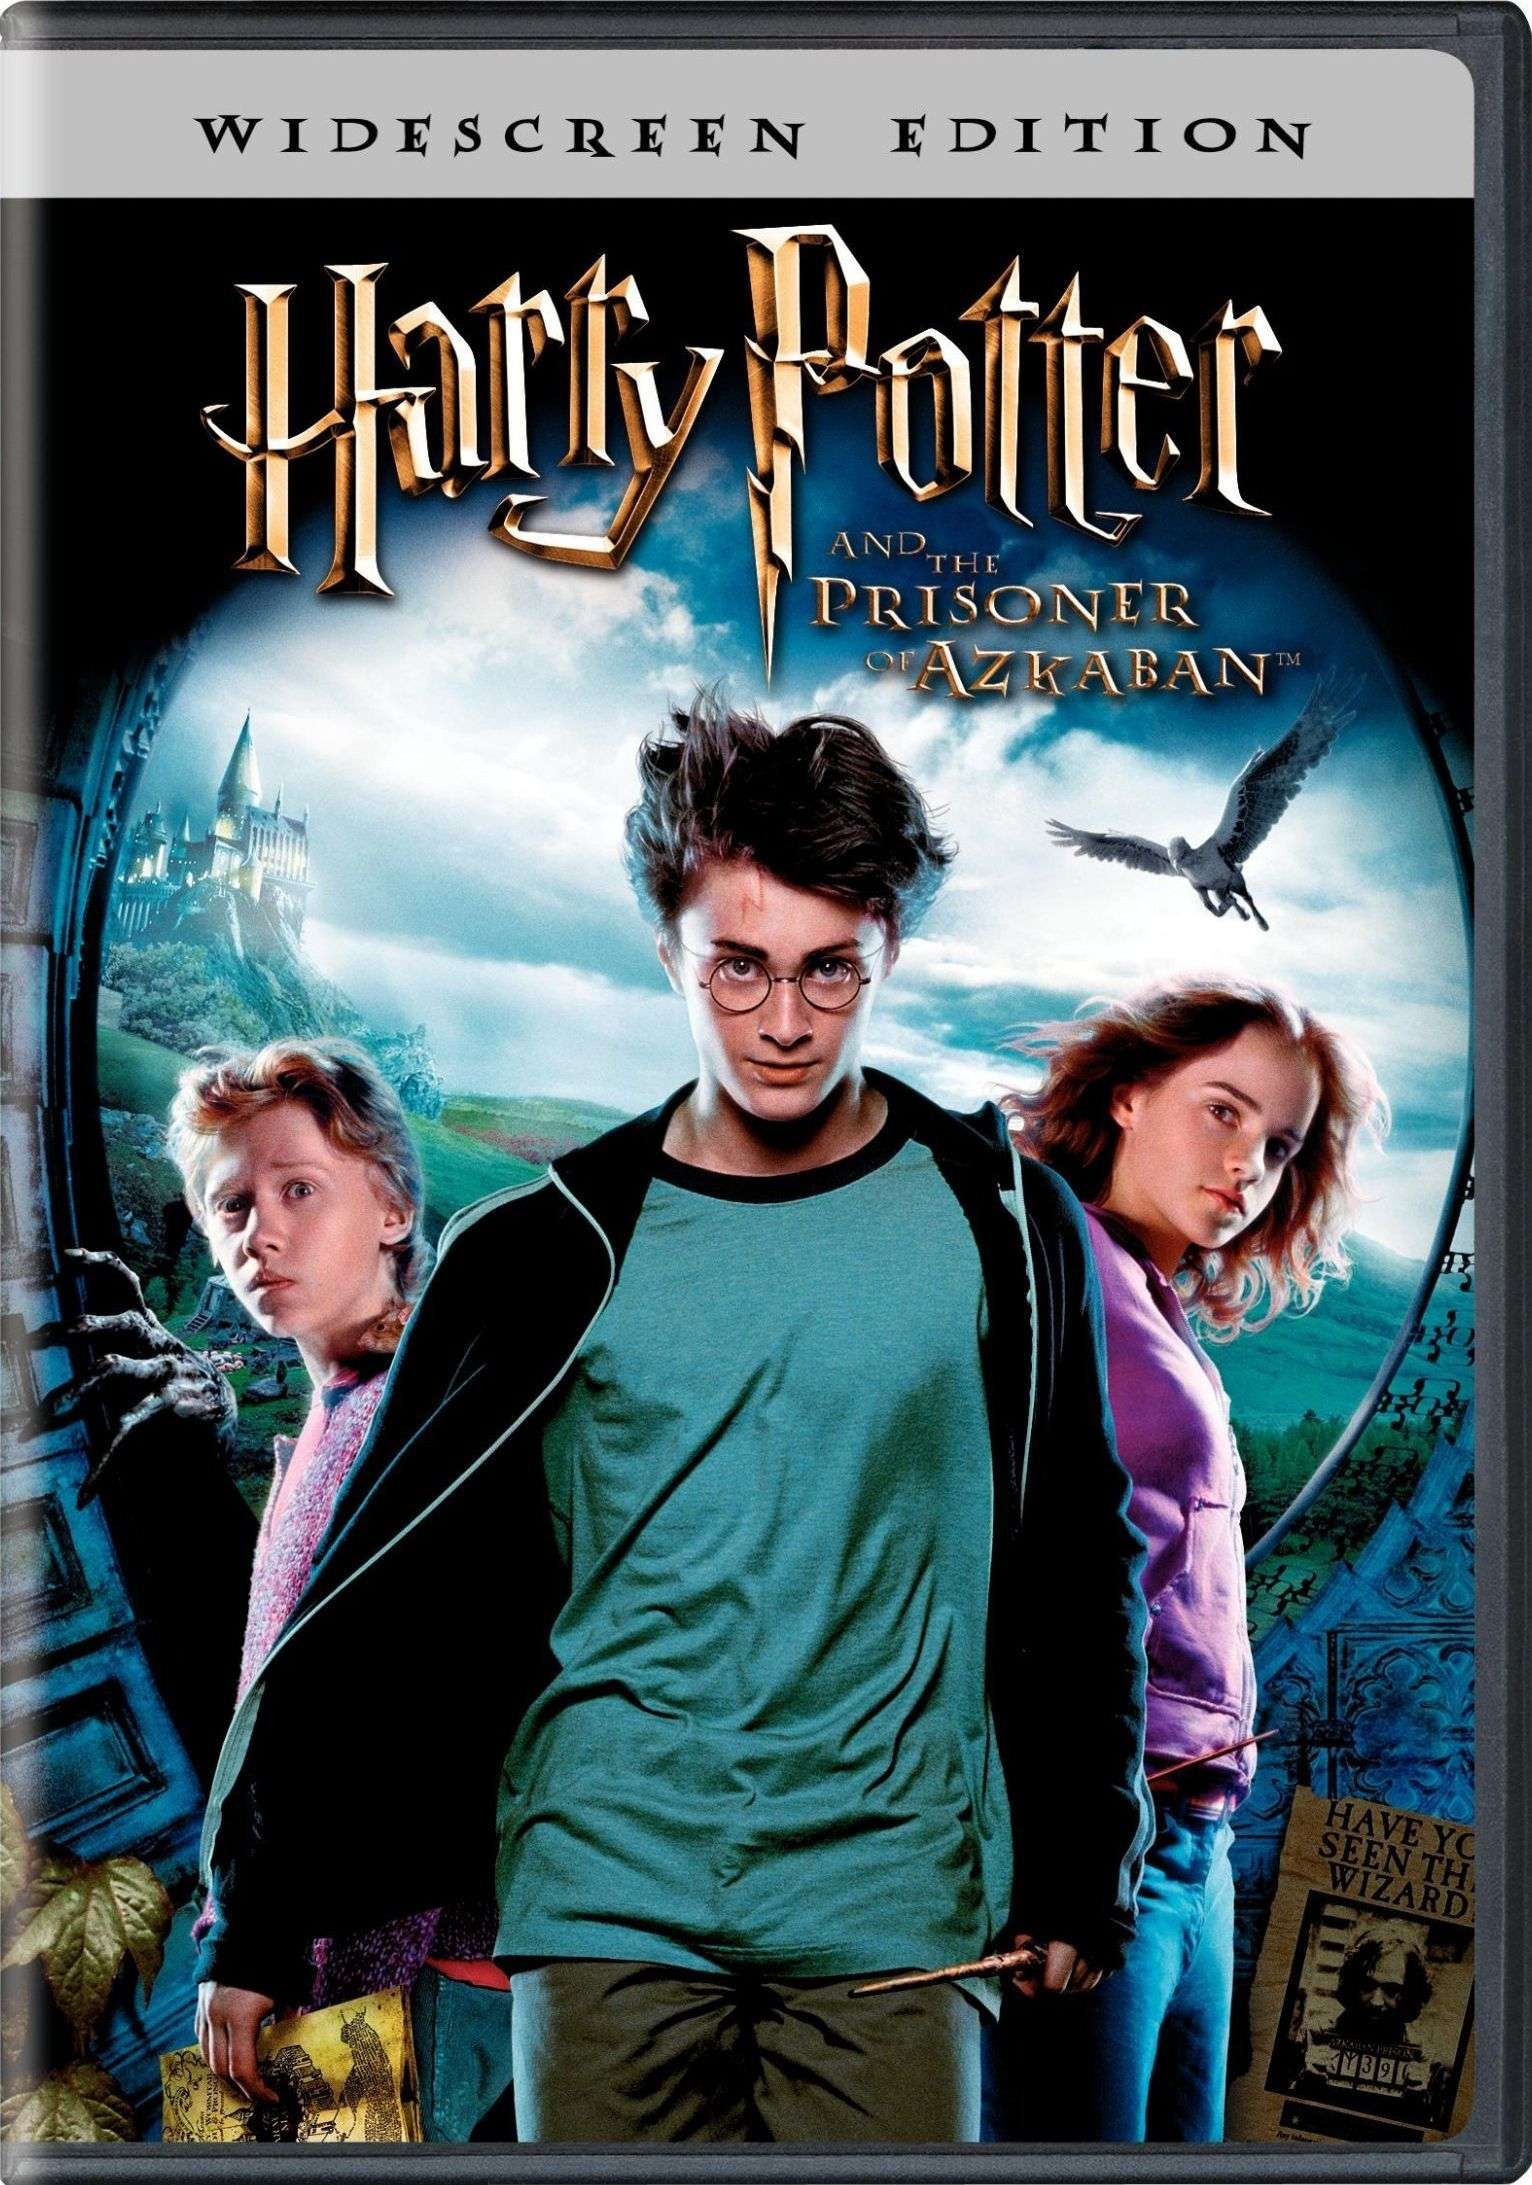 Harry Potter and the Prisoner of Azkaban DVD Release Date